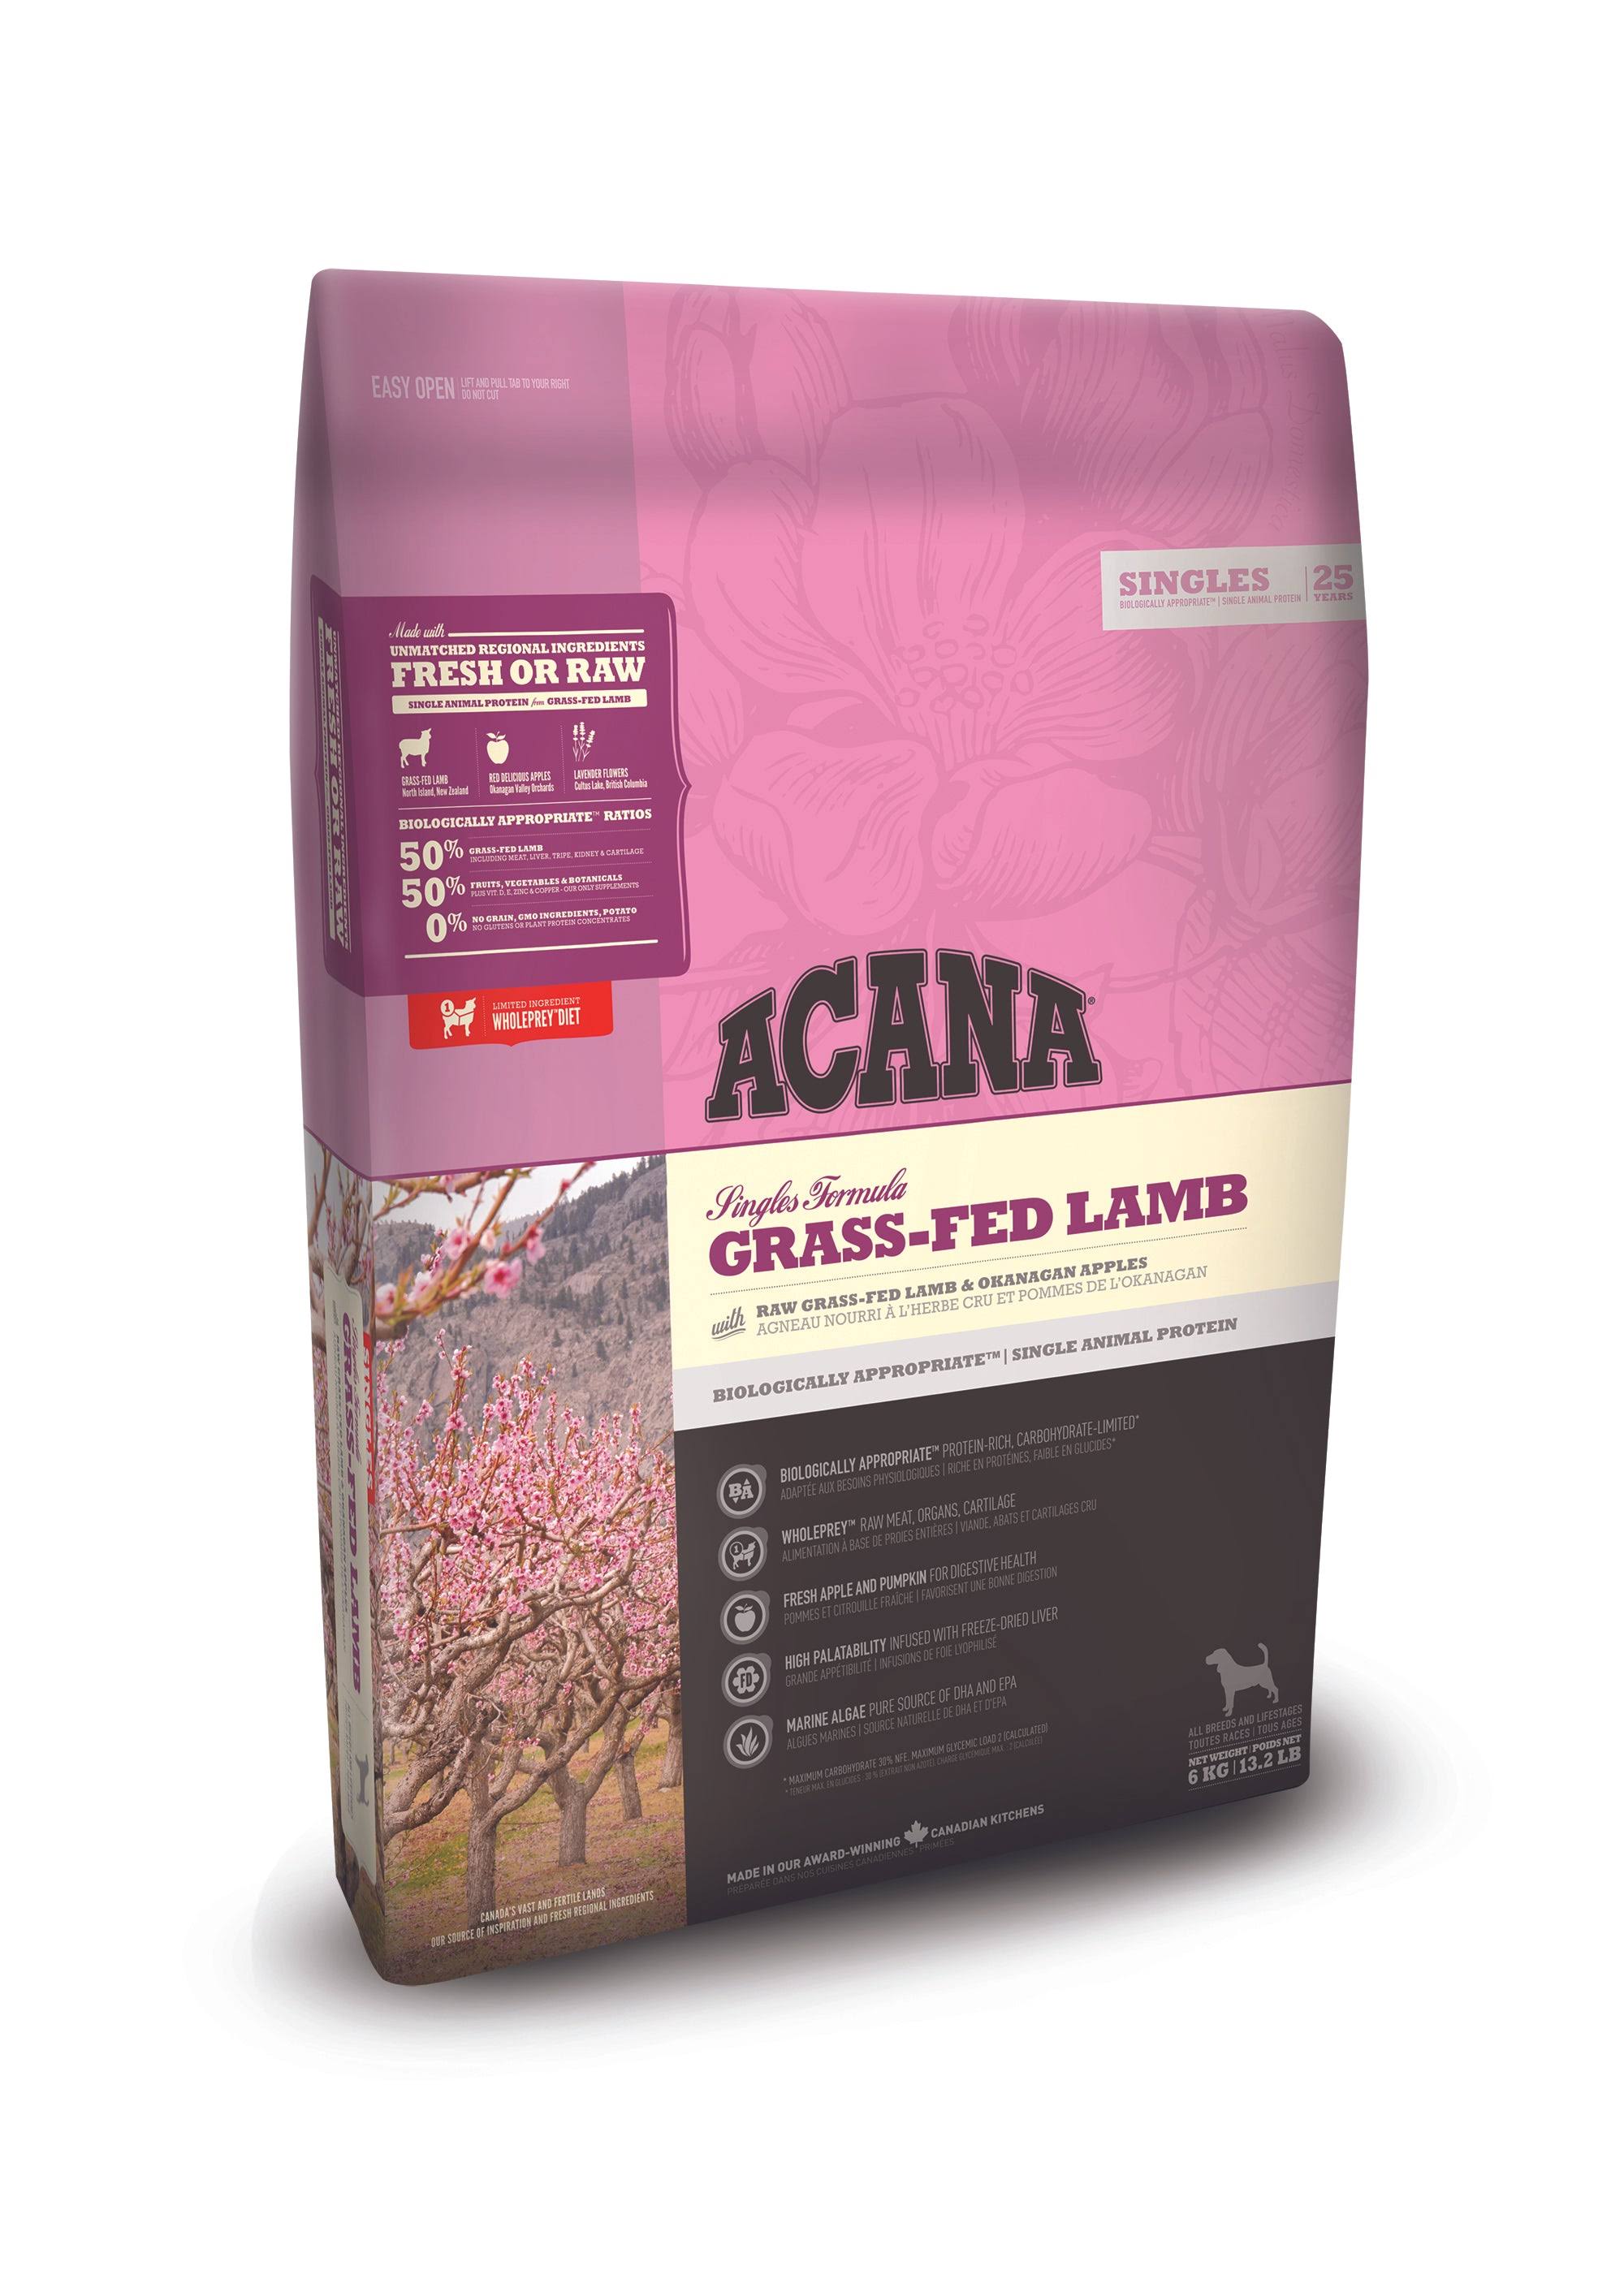 Acana Grass-Fed Lamb Dog Food, 6 kg